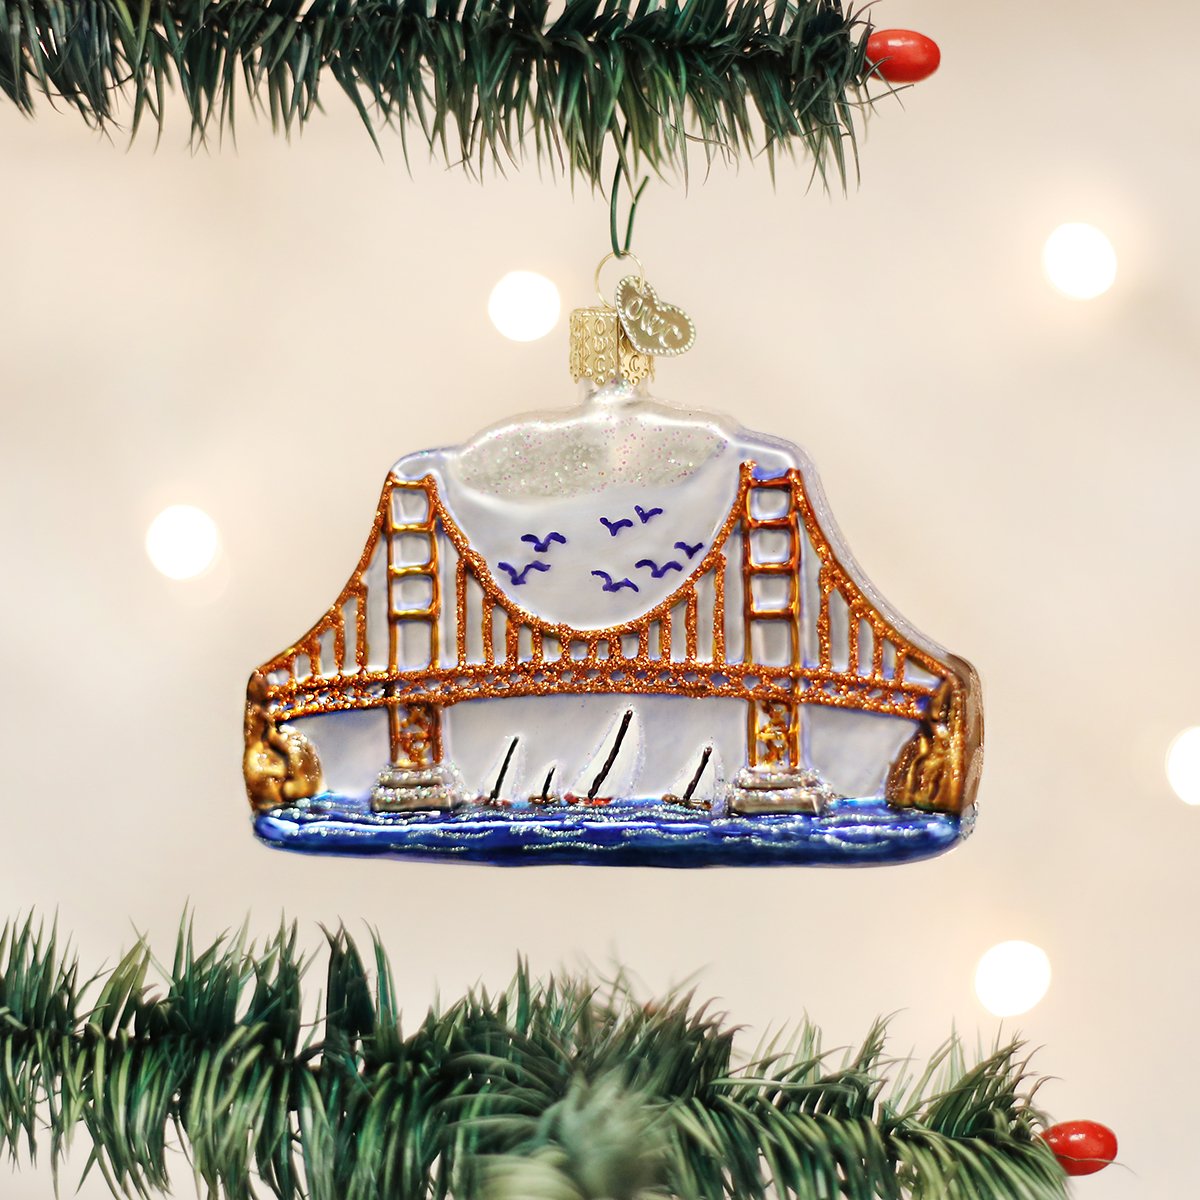 Old World Christmas - Golden Gate Bridge Ornament    